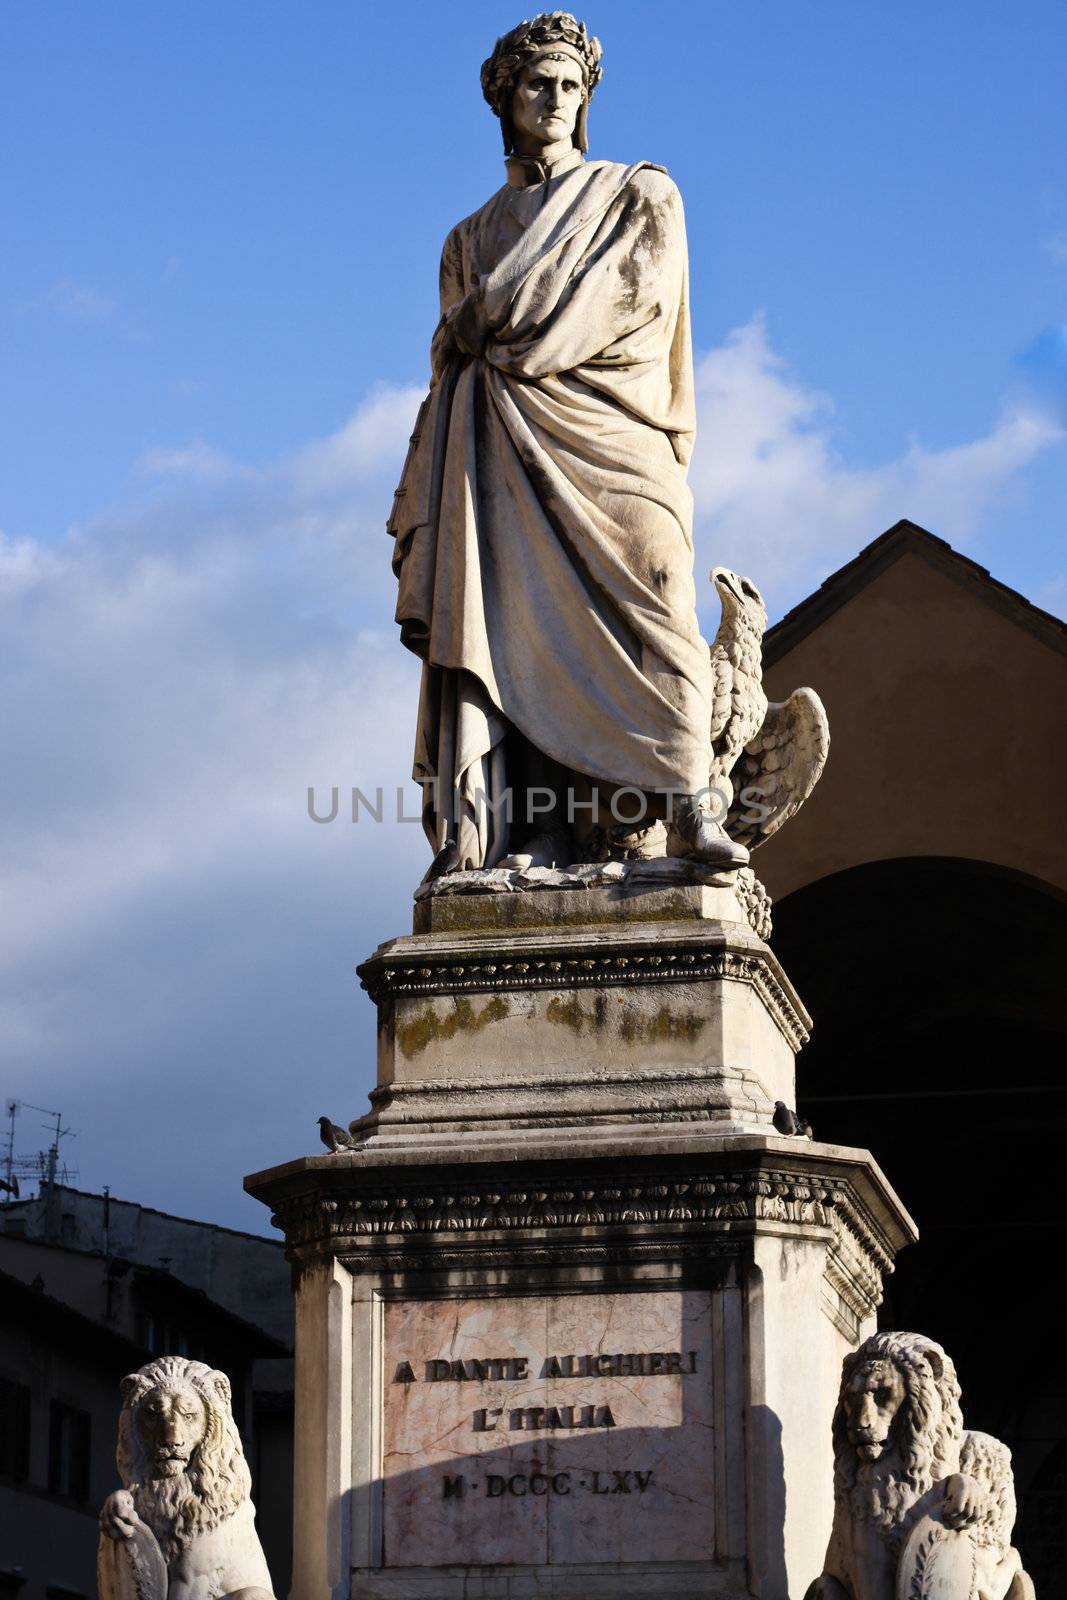 Statue of dante alighieri in florence italy. 